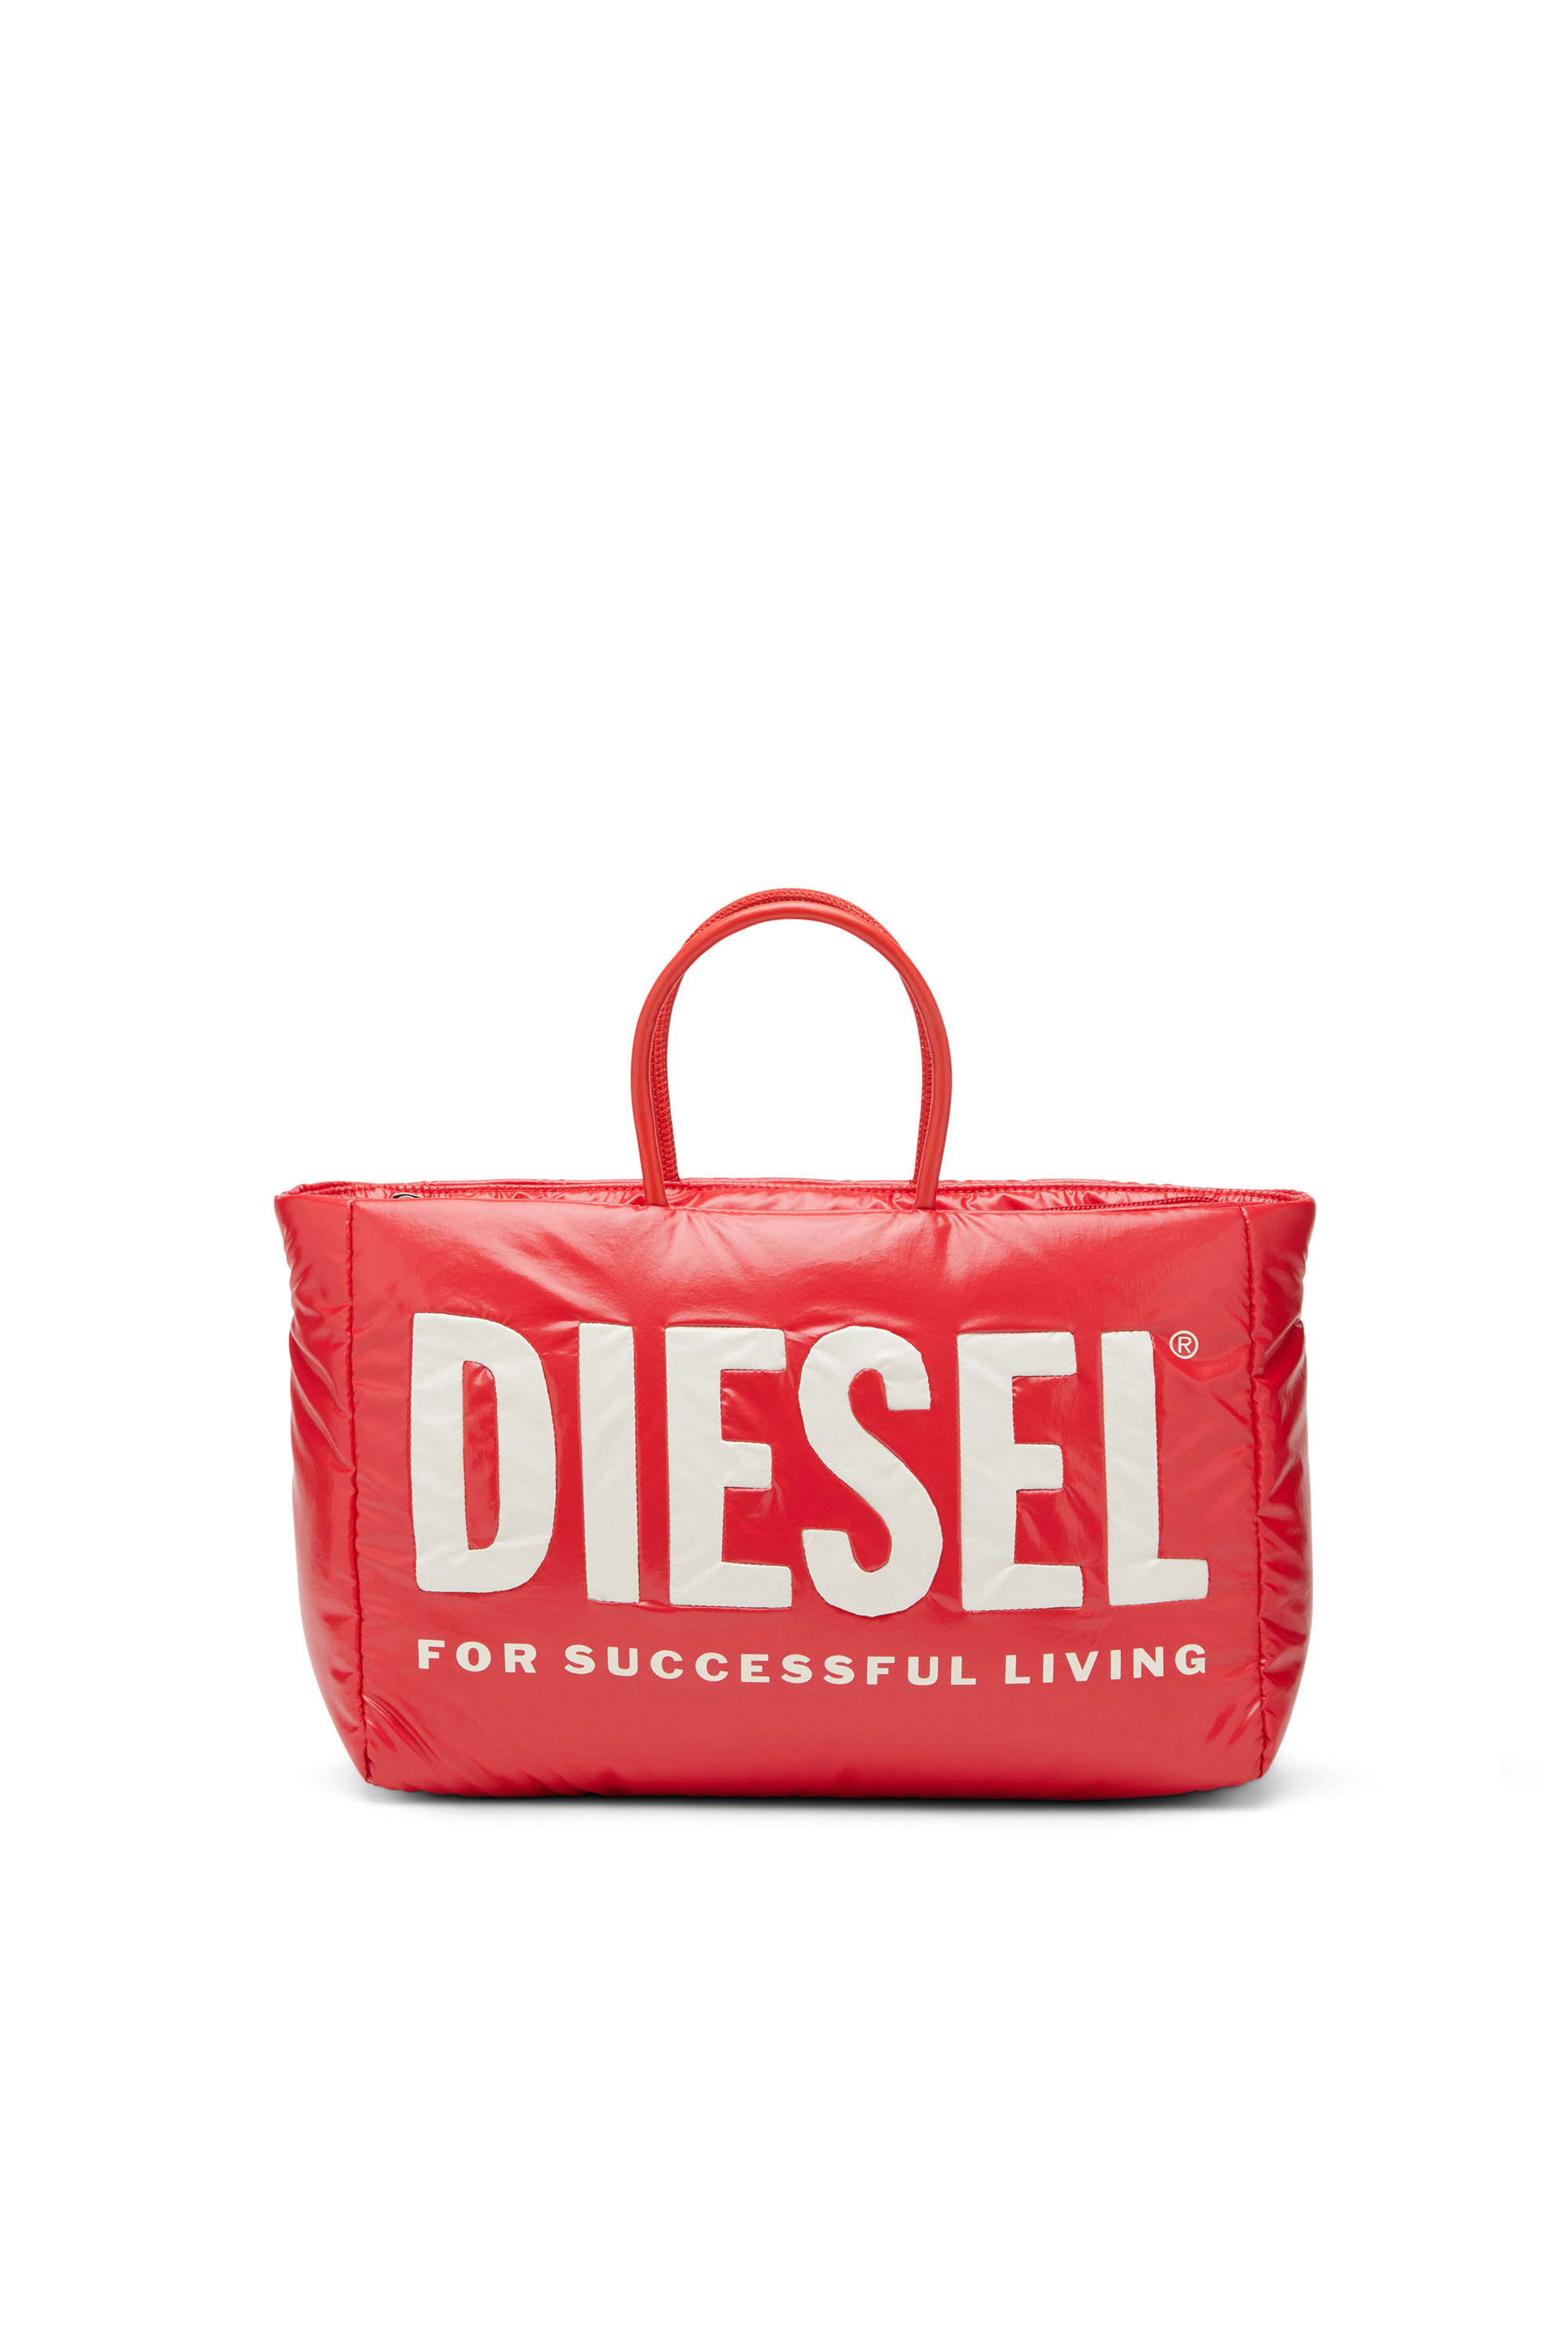 Diesel - PUFF DSL TOTE M X, Red - Image 1